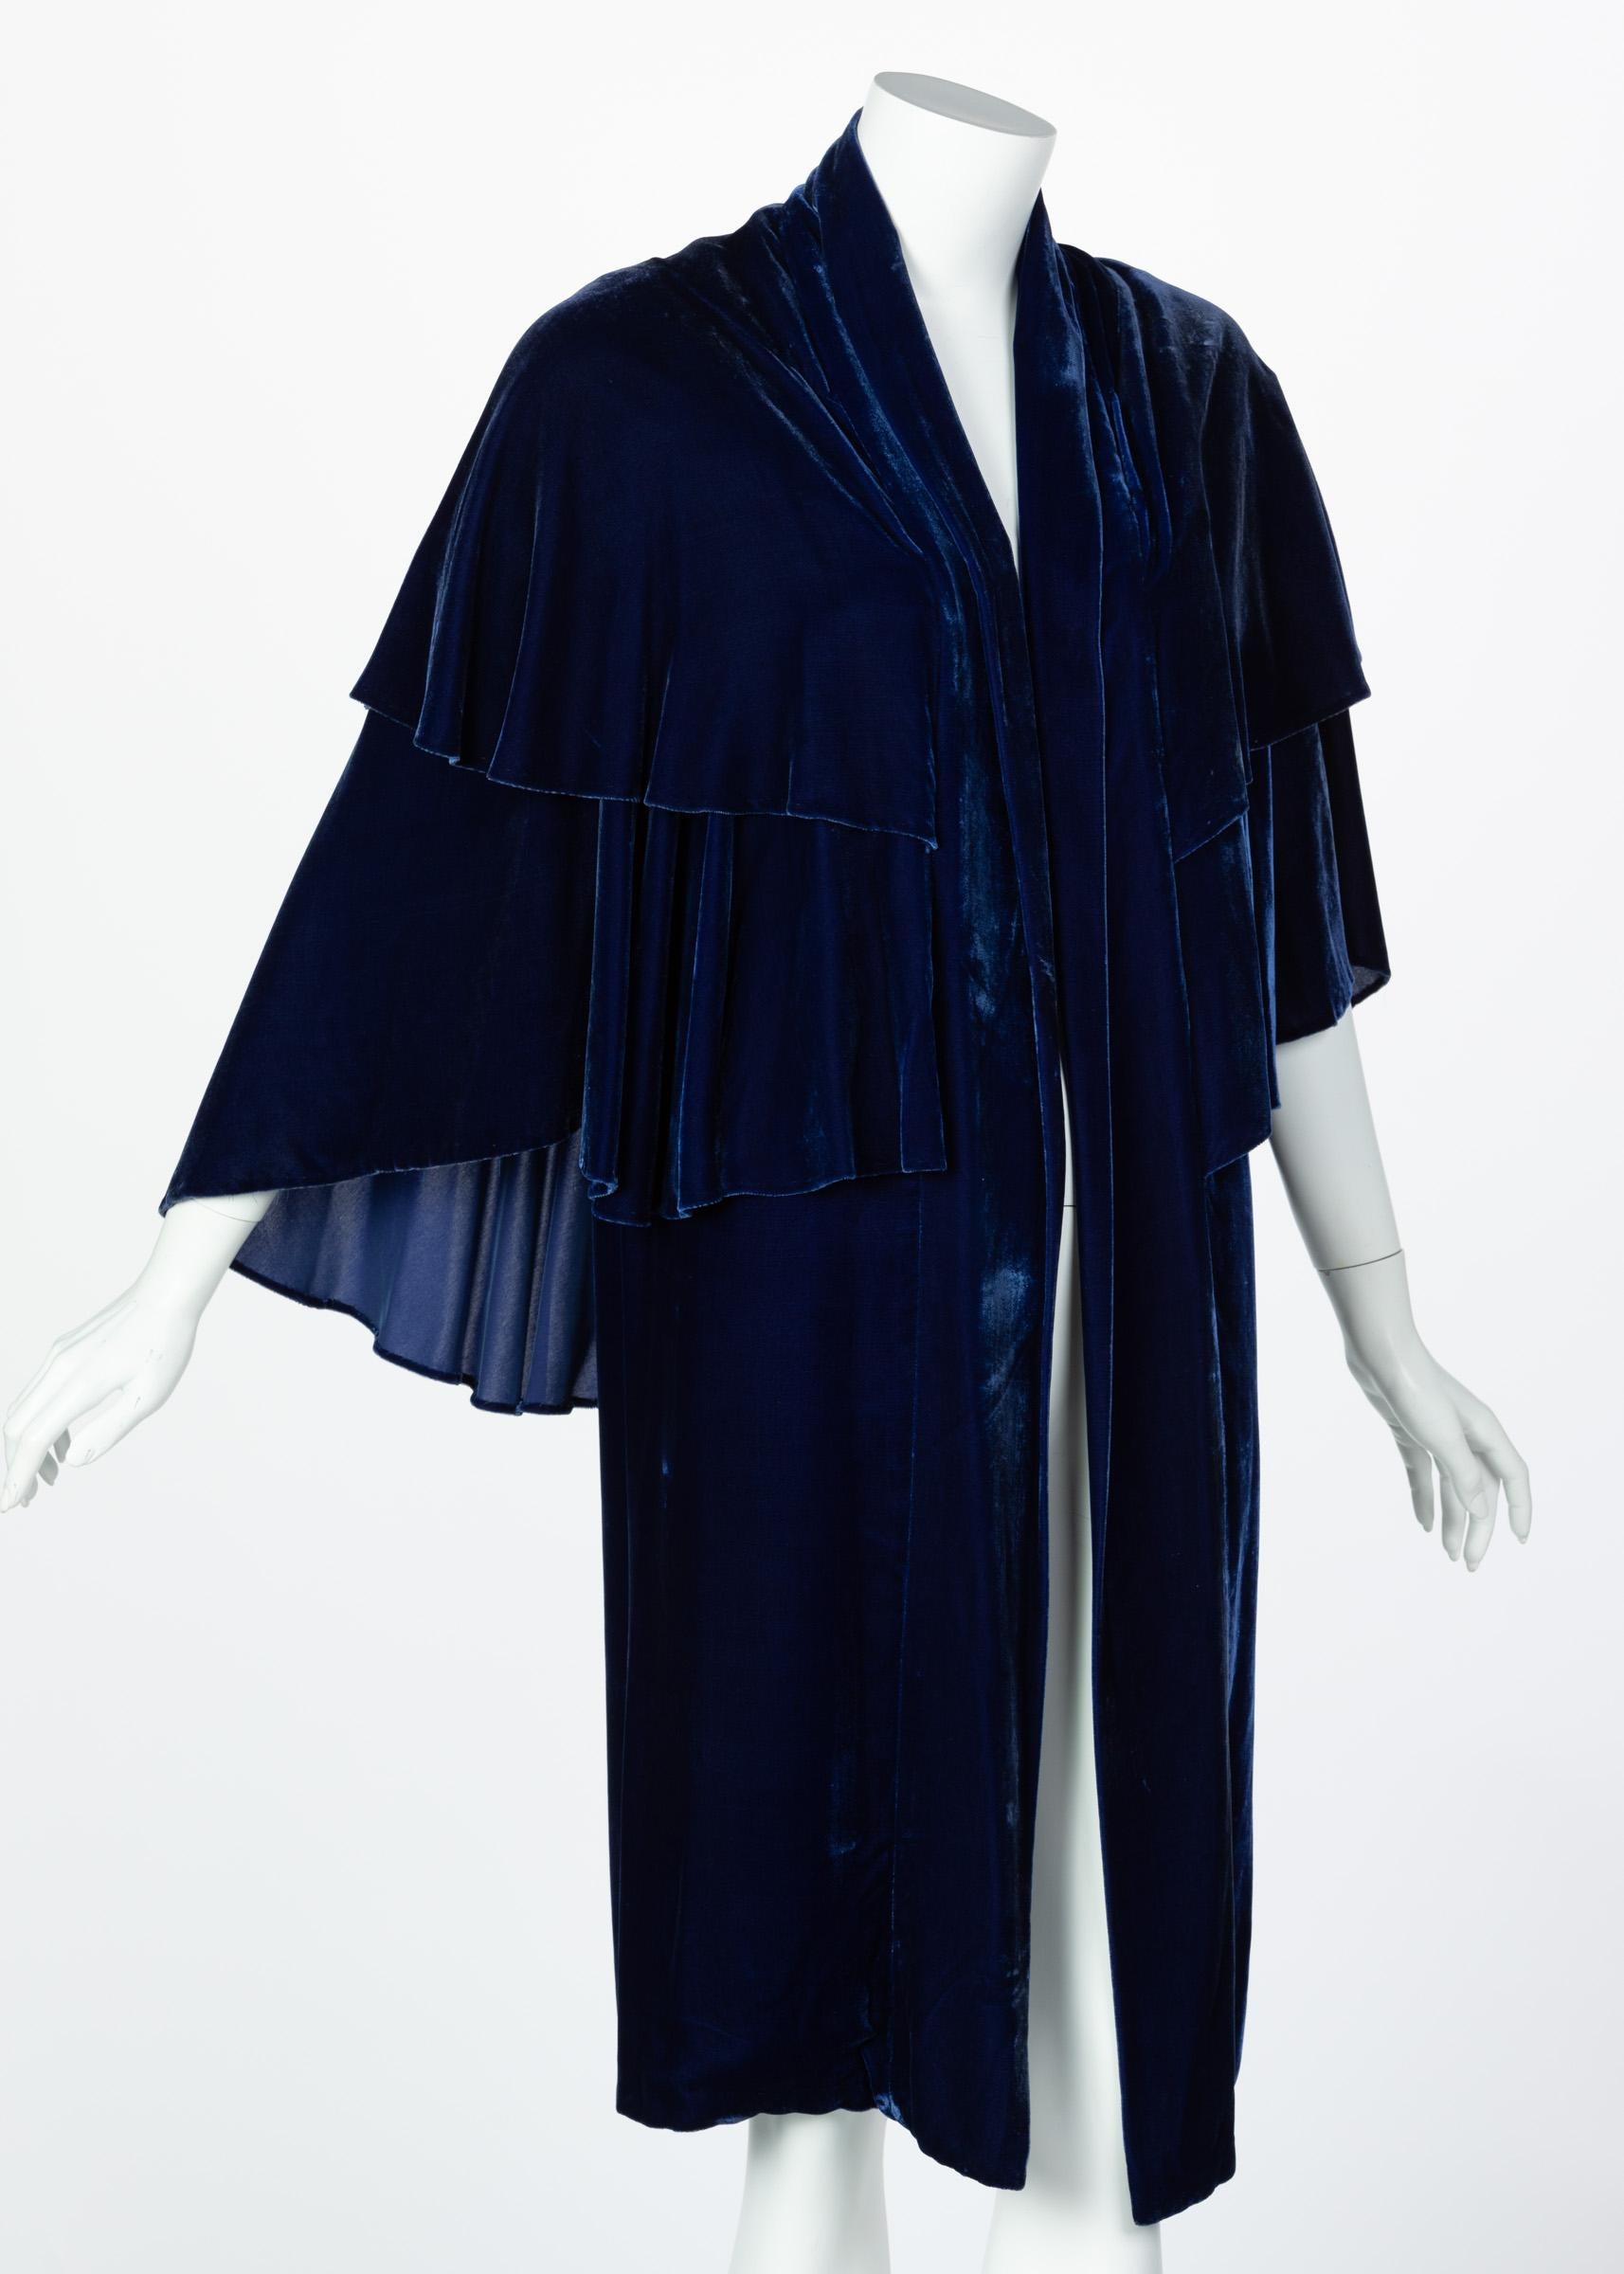 I Magnin & Co. Blue Silk velvet Evening Cape Coat, 1930s In Good Condition For Sale In Boca Raton, FL